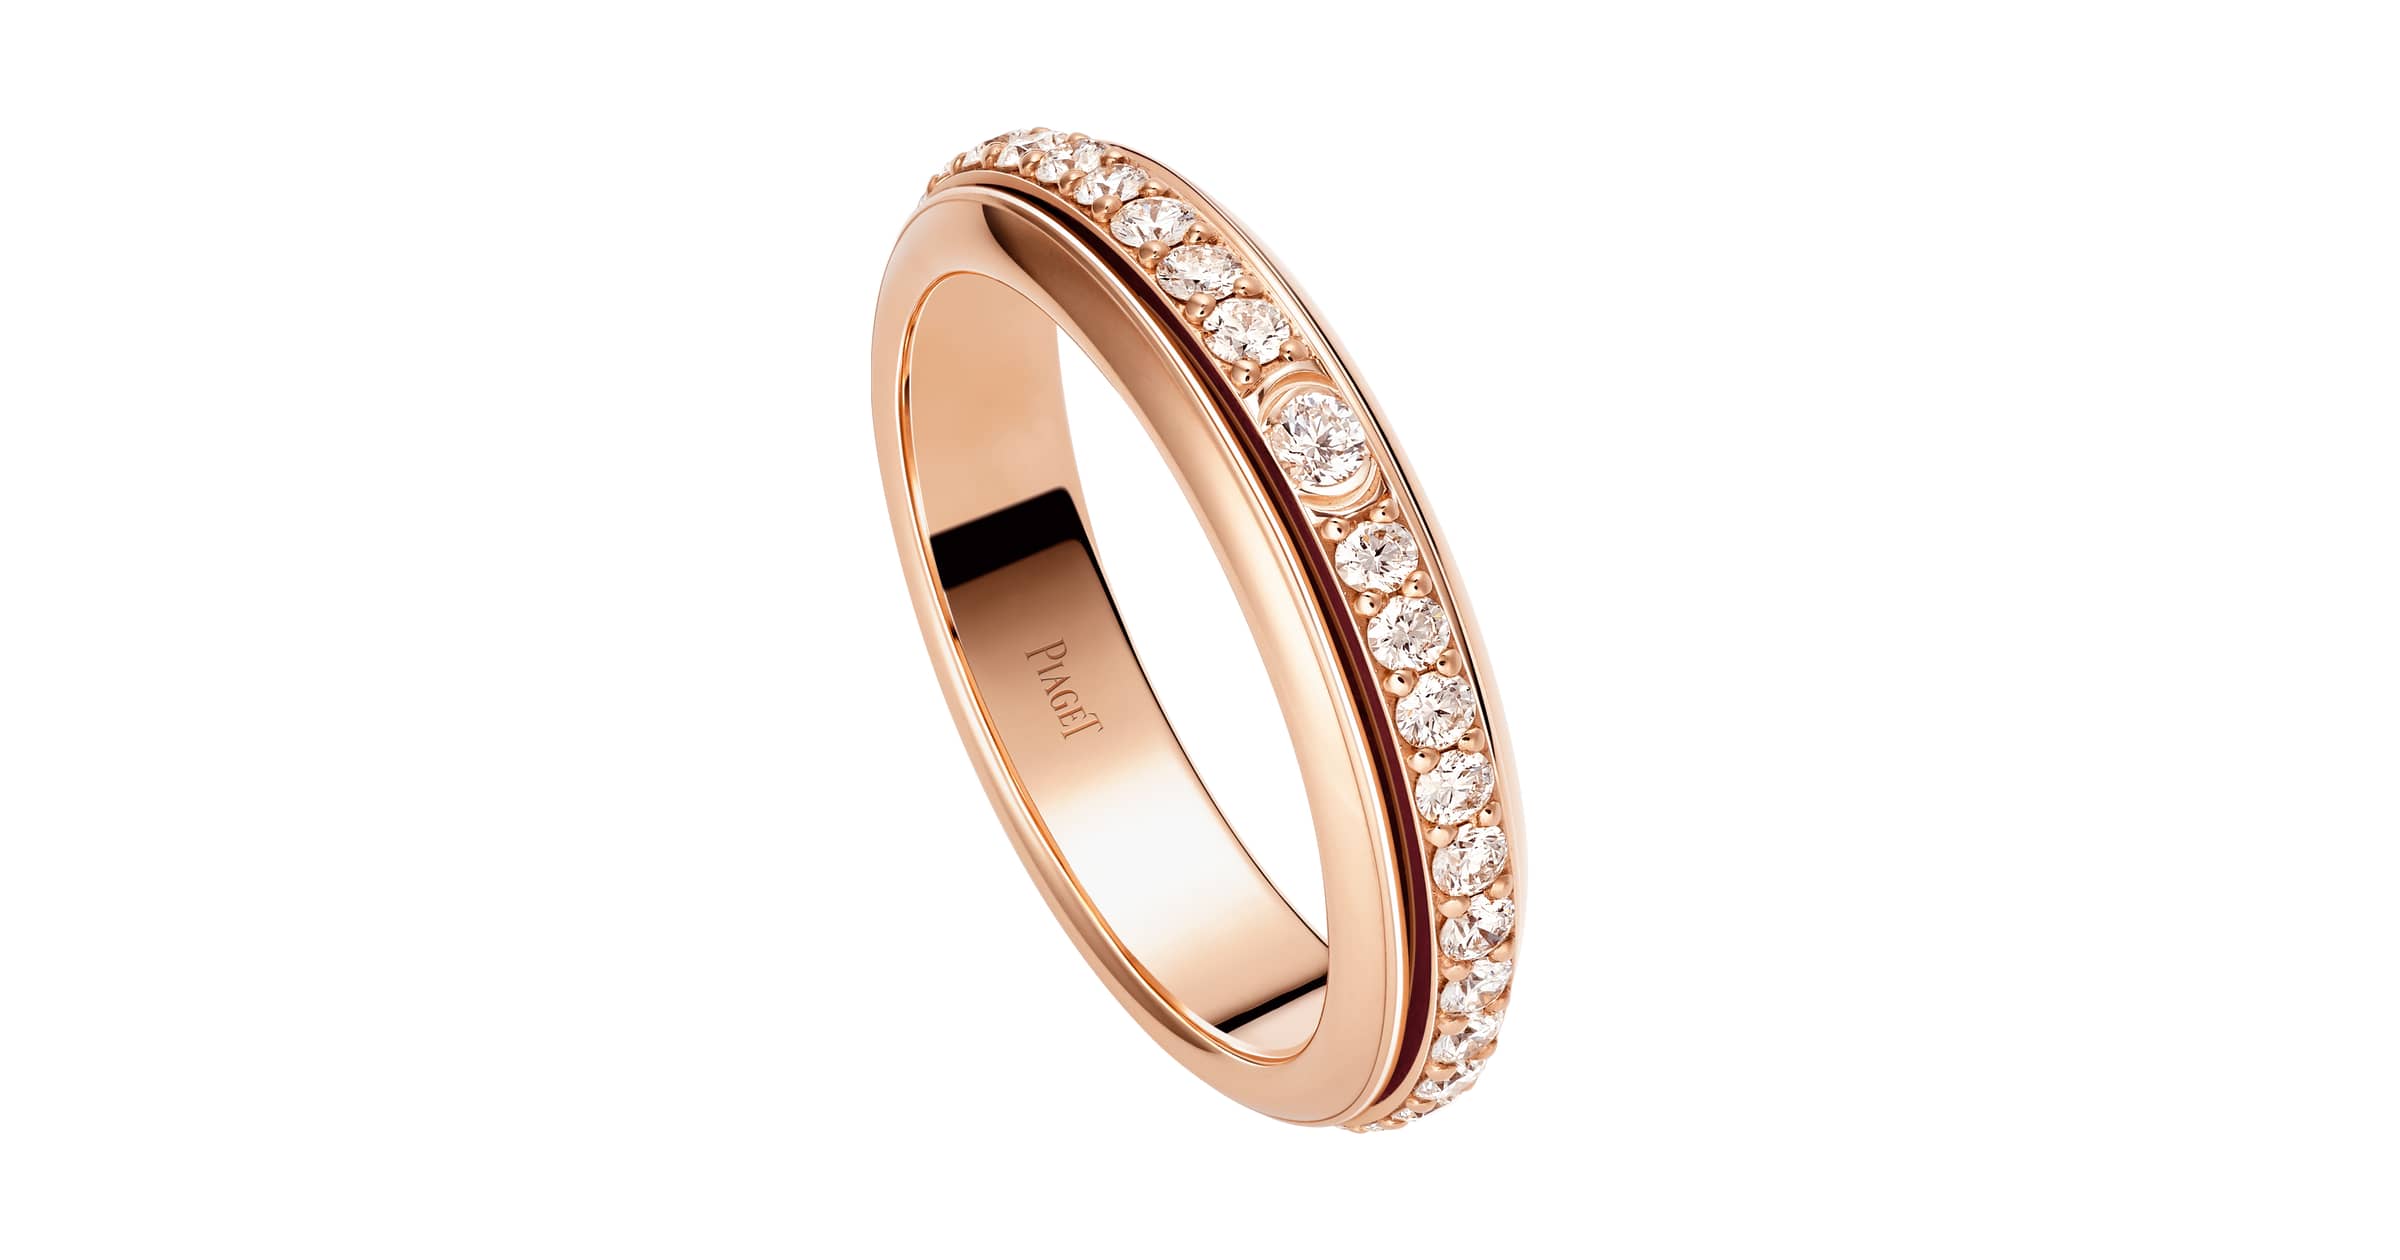 Gold Rings In Amritsar, Punjab At Best Price | Gold Rings Manufacturers,  Suppliers In Amritsar